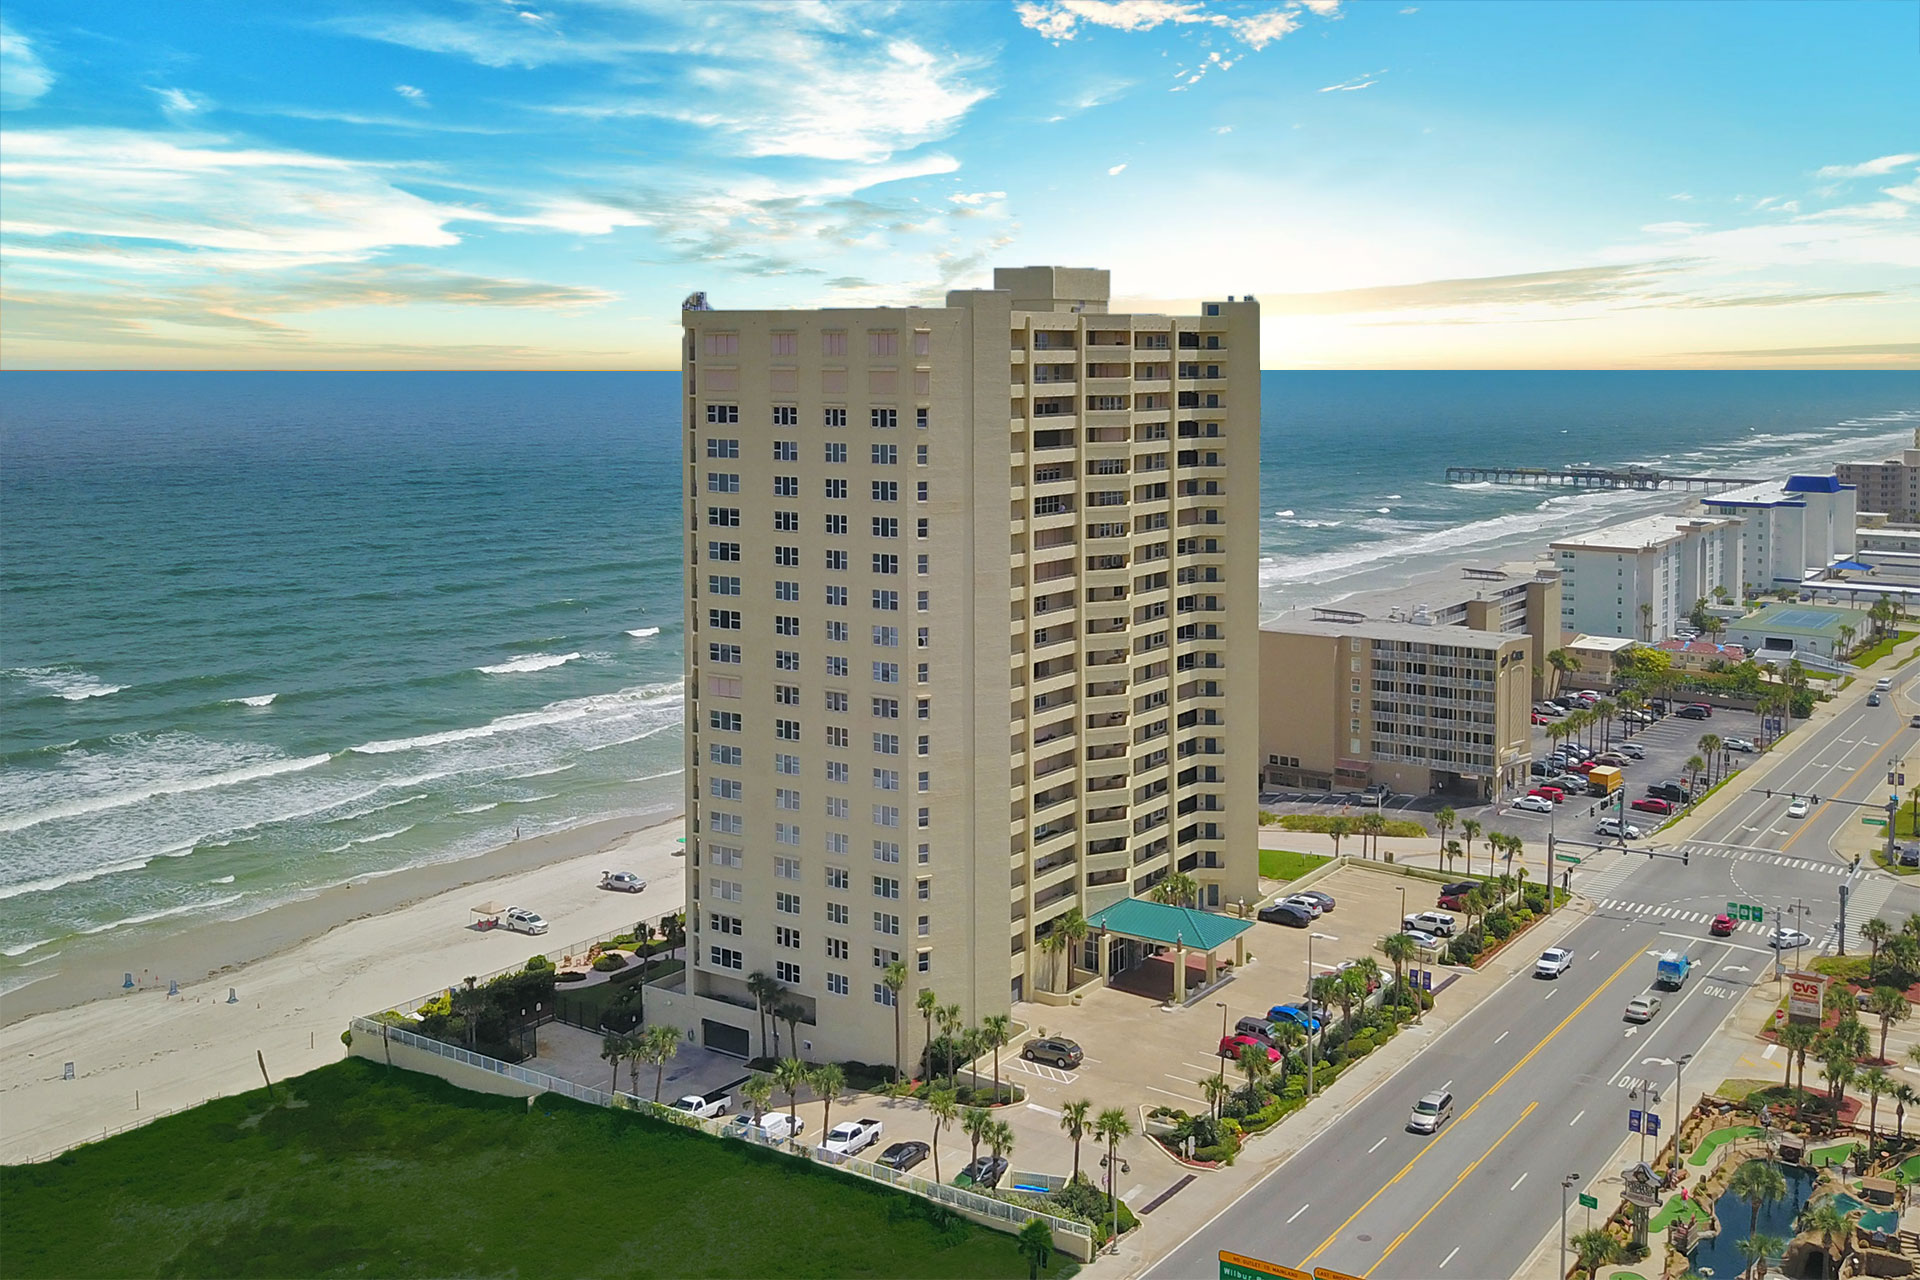 Towers Ten condos for sale in Daytona Beach Shores, FL. 3425 S Atlantic | VA Approved Condos | The LUXE Group 386-299-4043